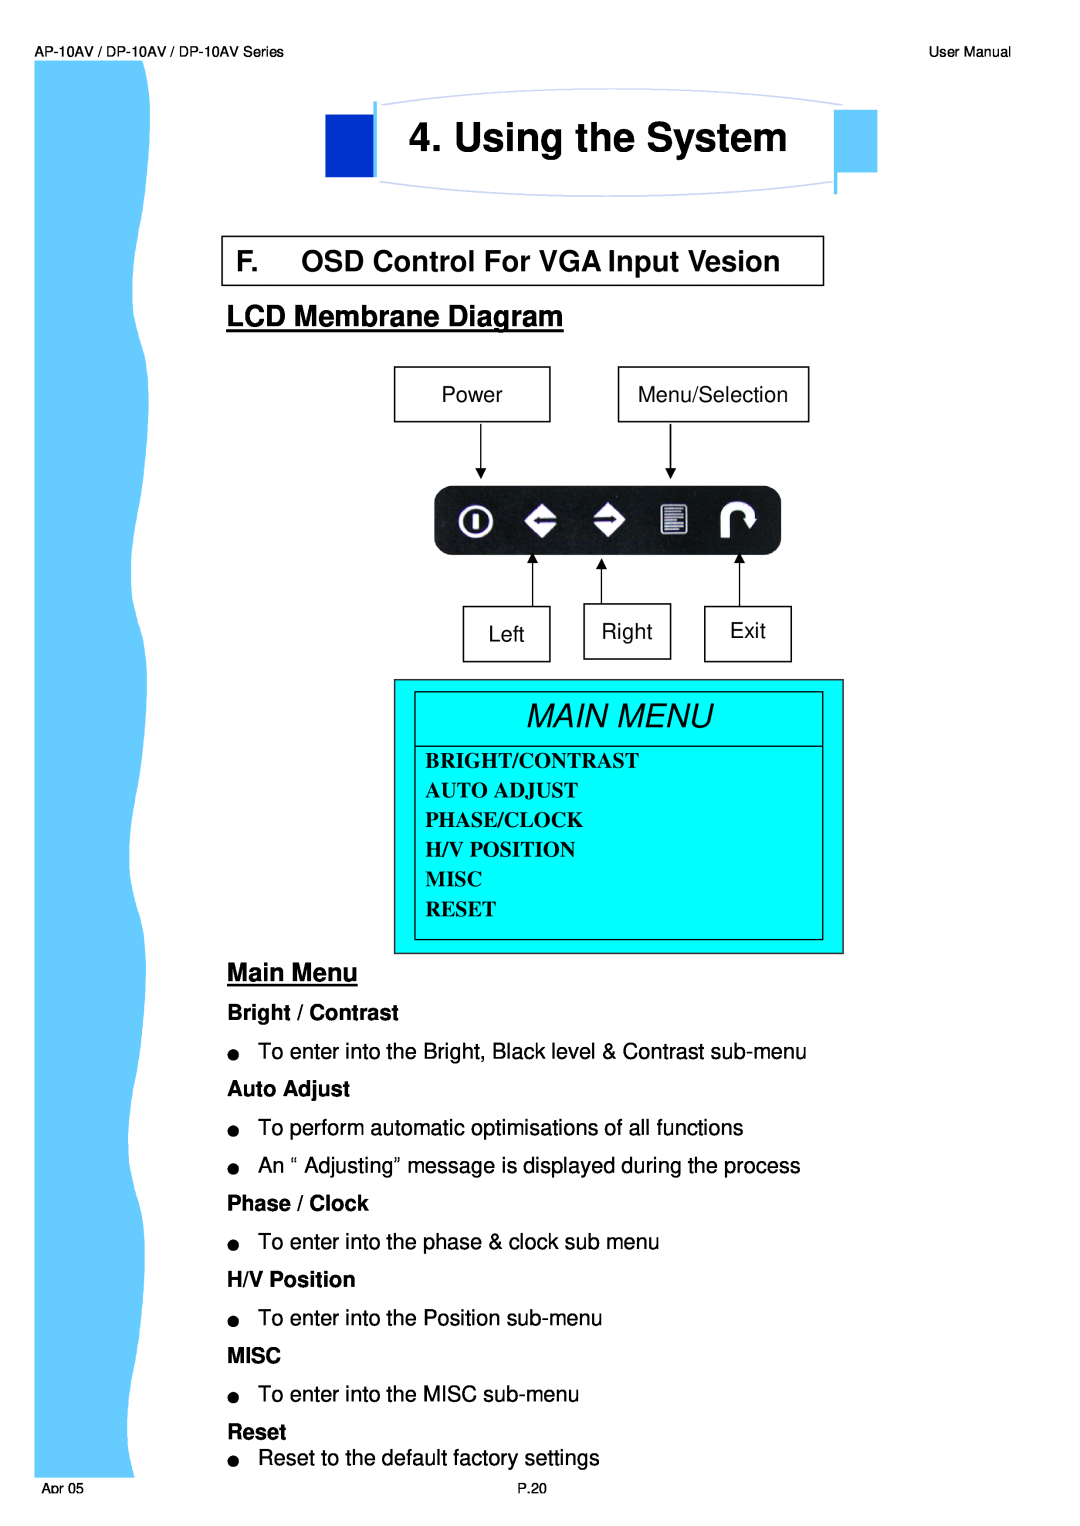 3M UMUV.10-045V2 F. OSD Control For VGA Input Vesion LCD Membrane Diagram, Main Menu, Using the System, Bright / Contrast 